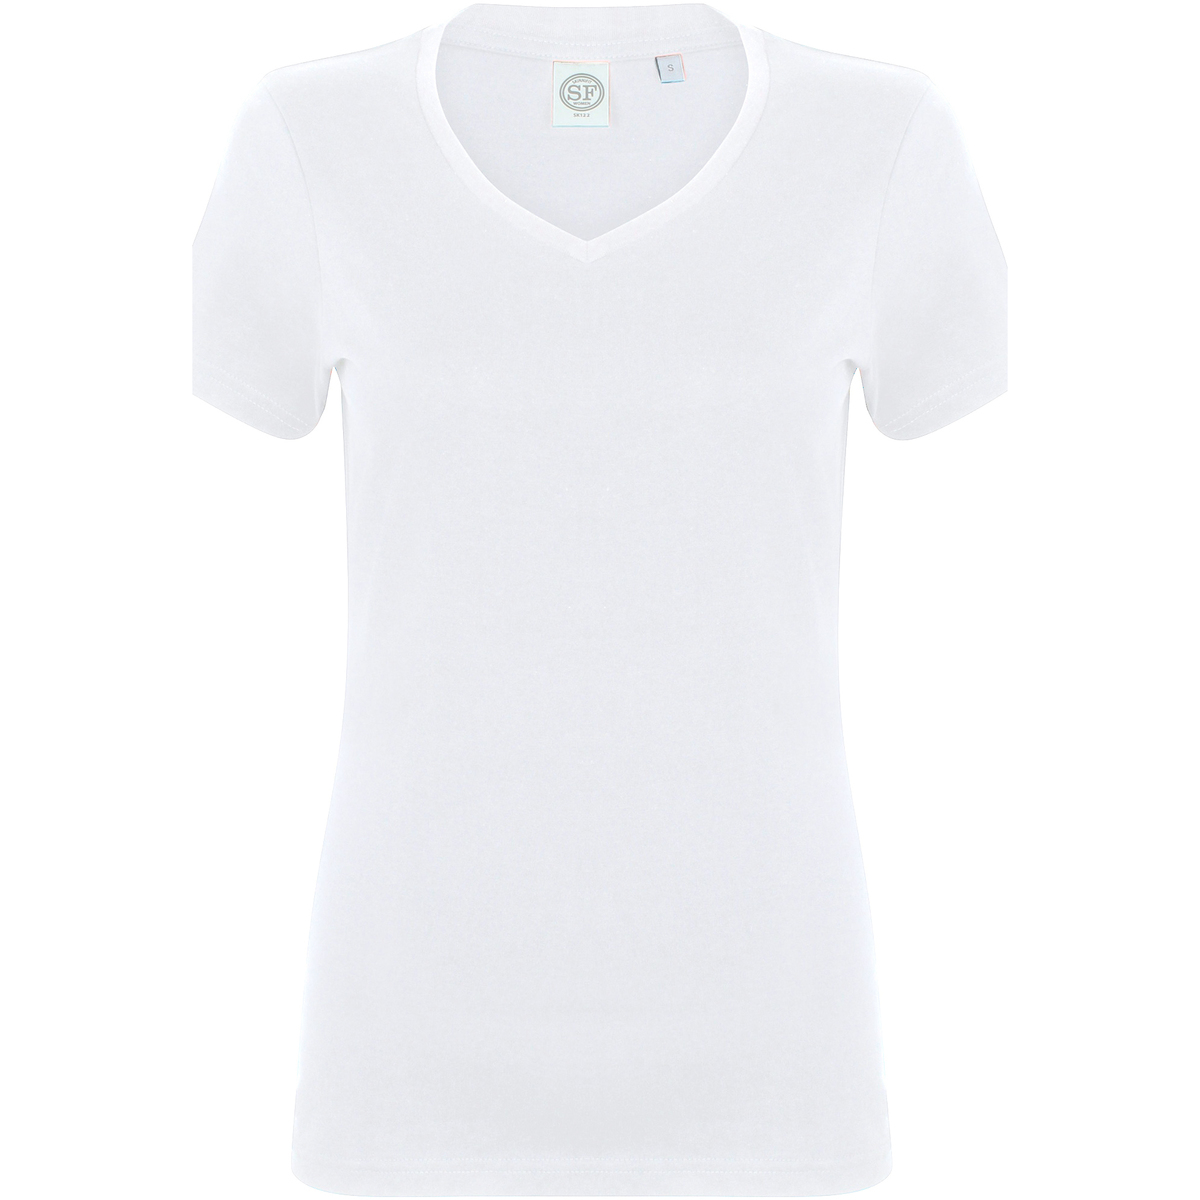 textil Mujer Camisetas manga corta Skinni Fit SK122 Blanco